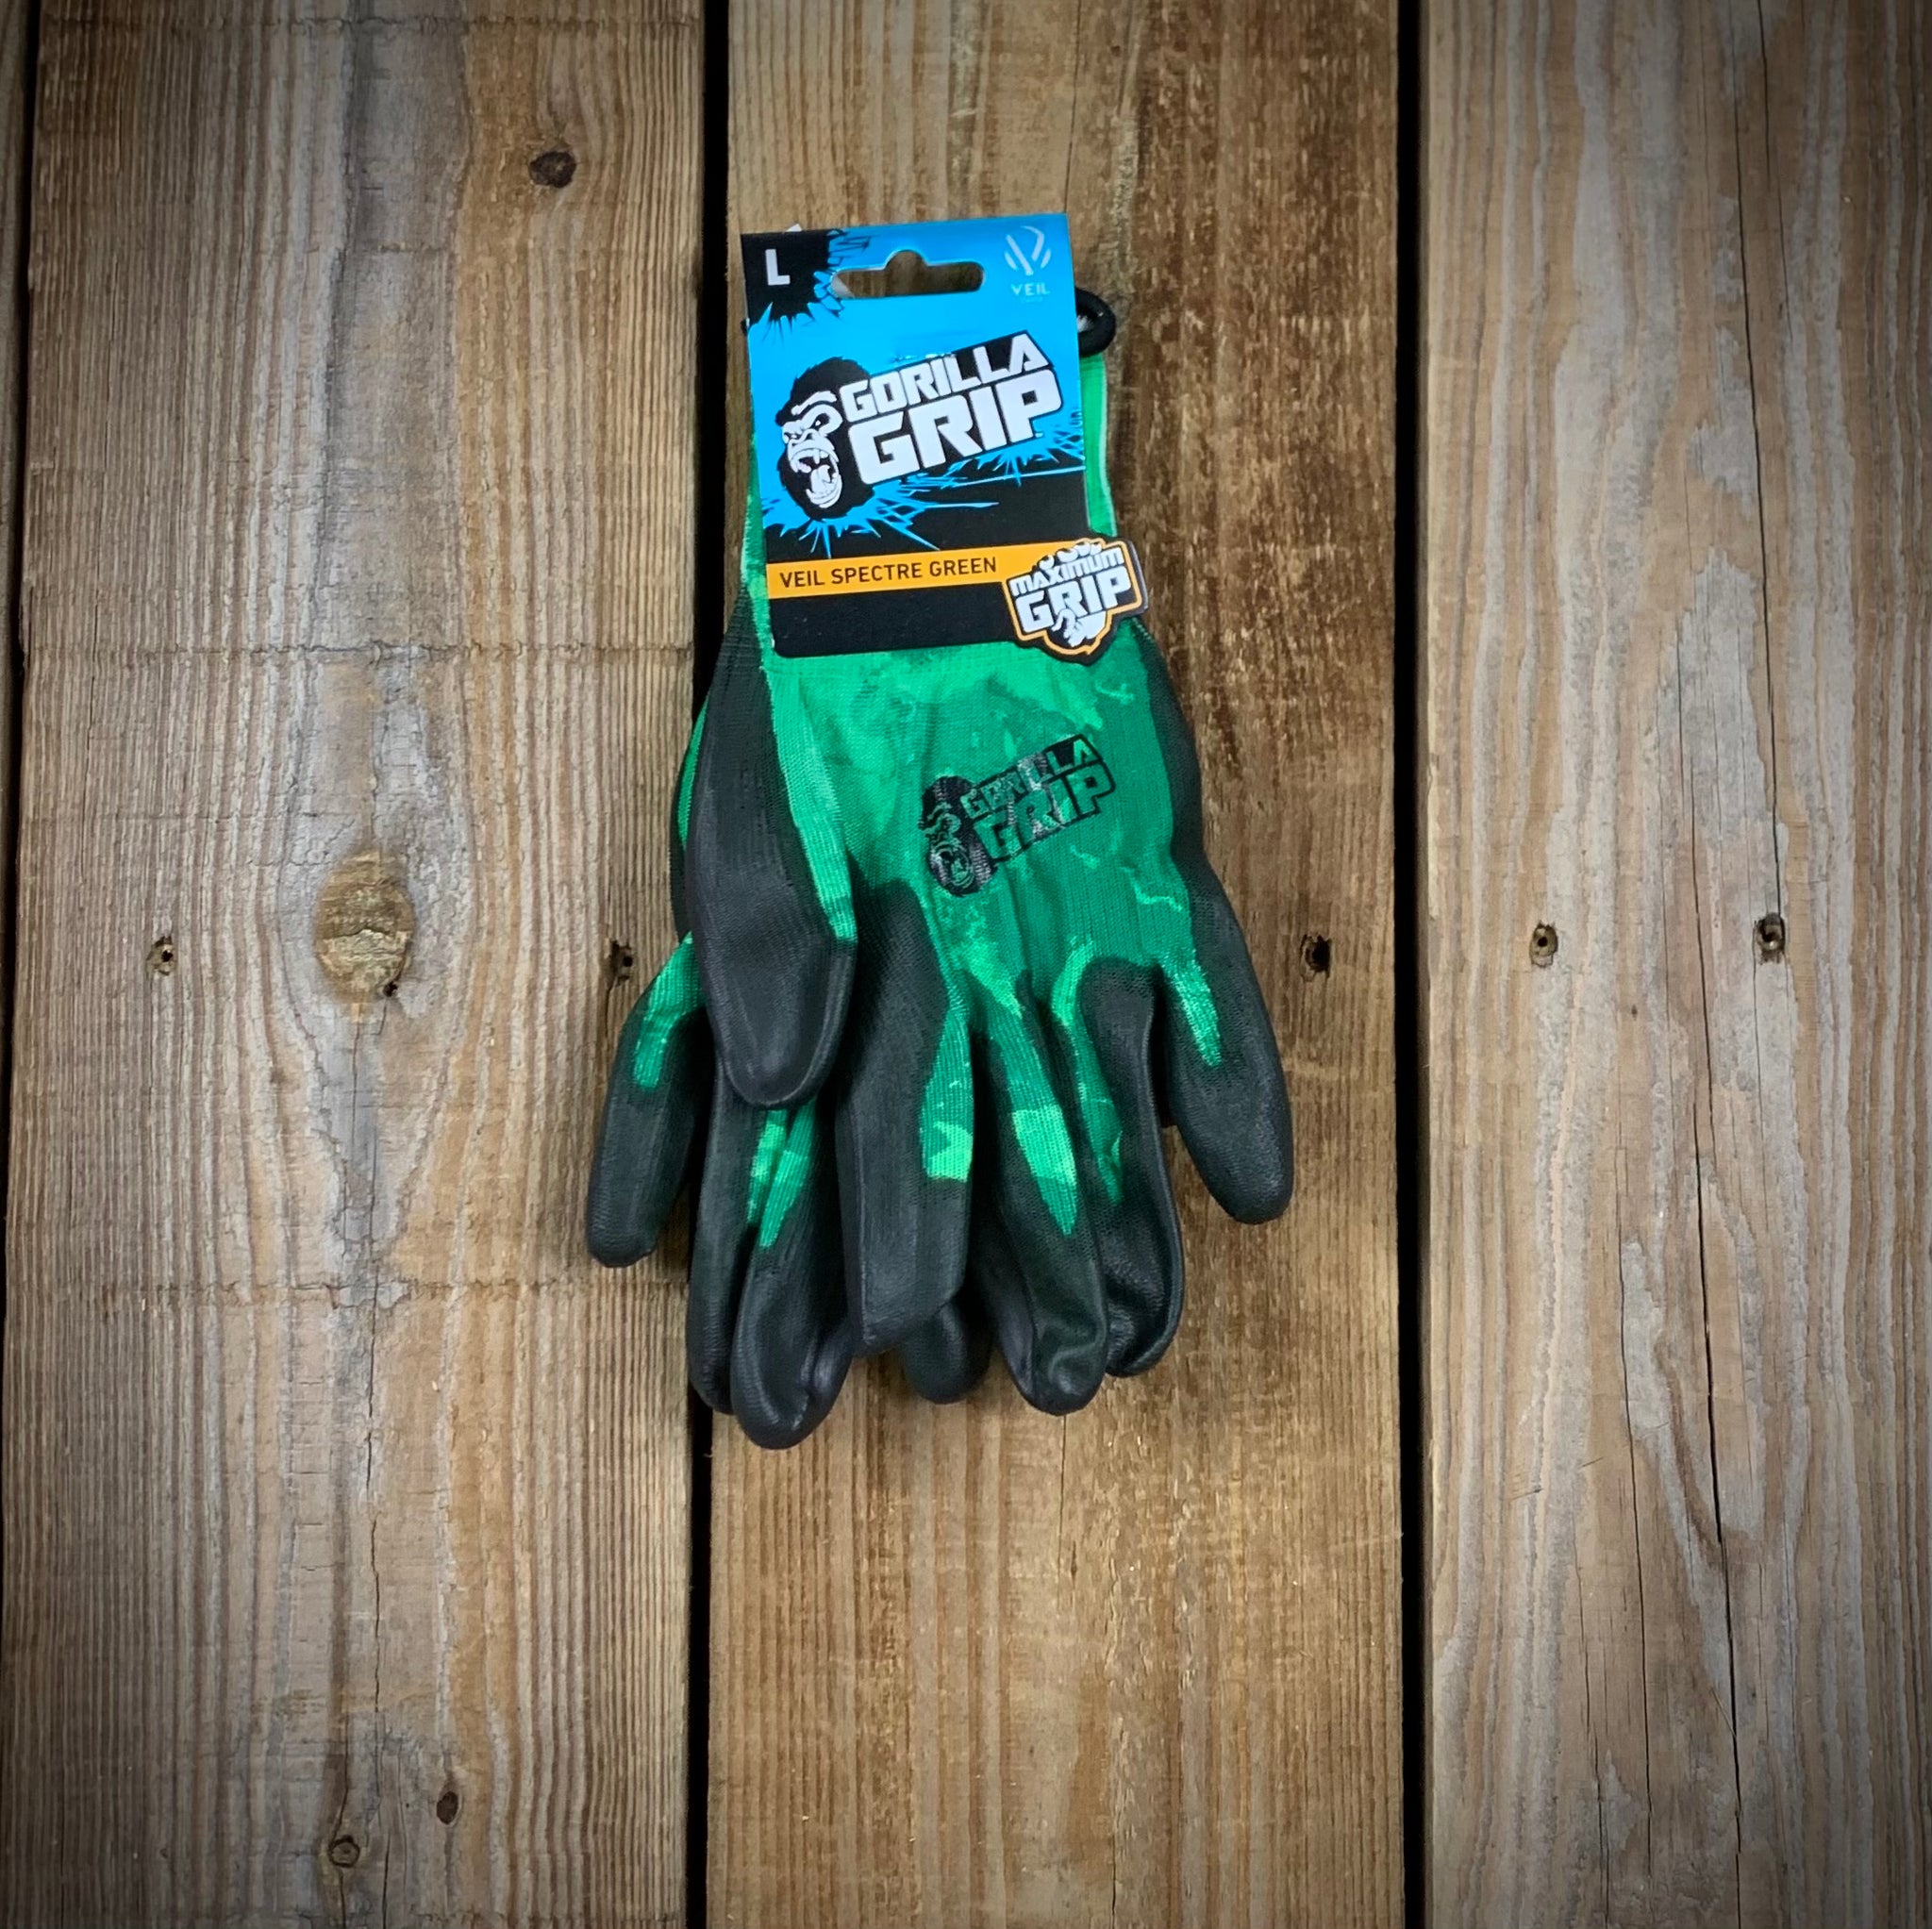 Gorilla Grip Cut Protection Gloves